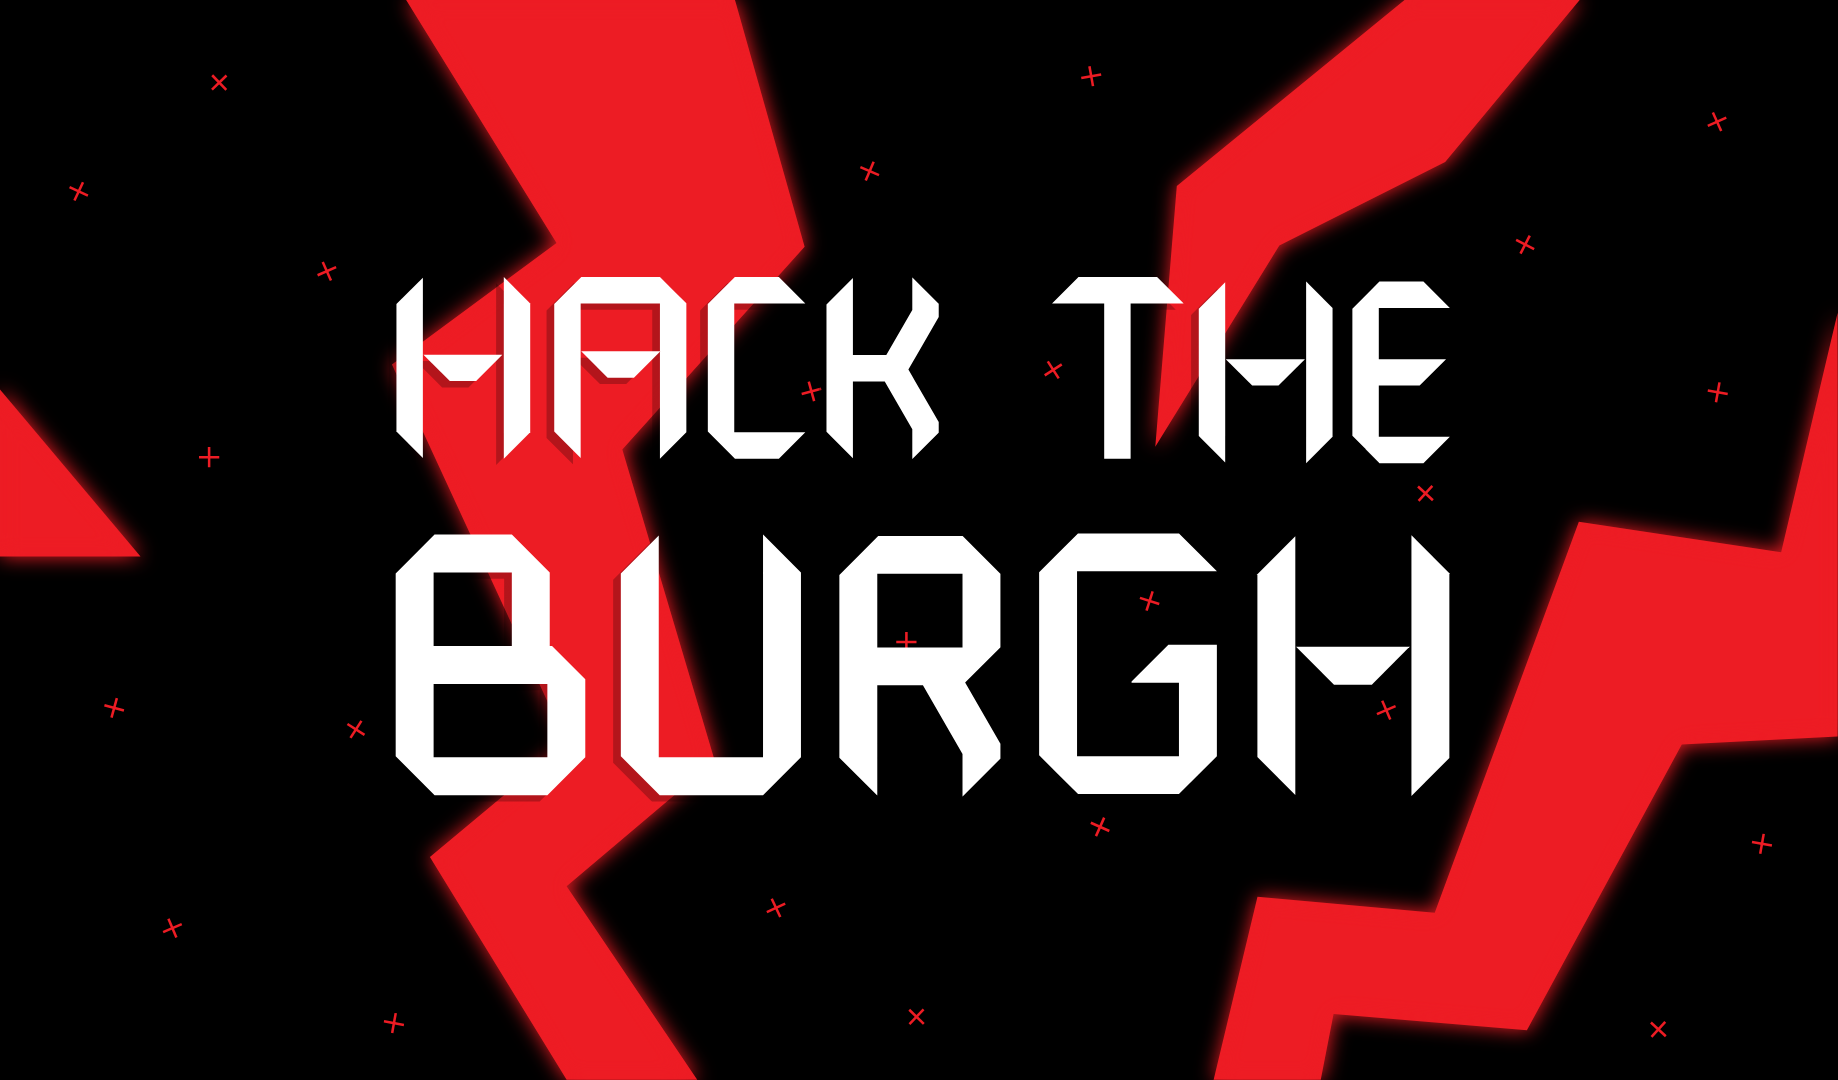 Hack the burgh 7 banner